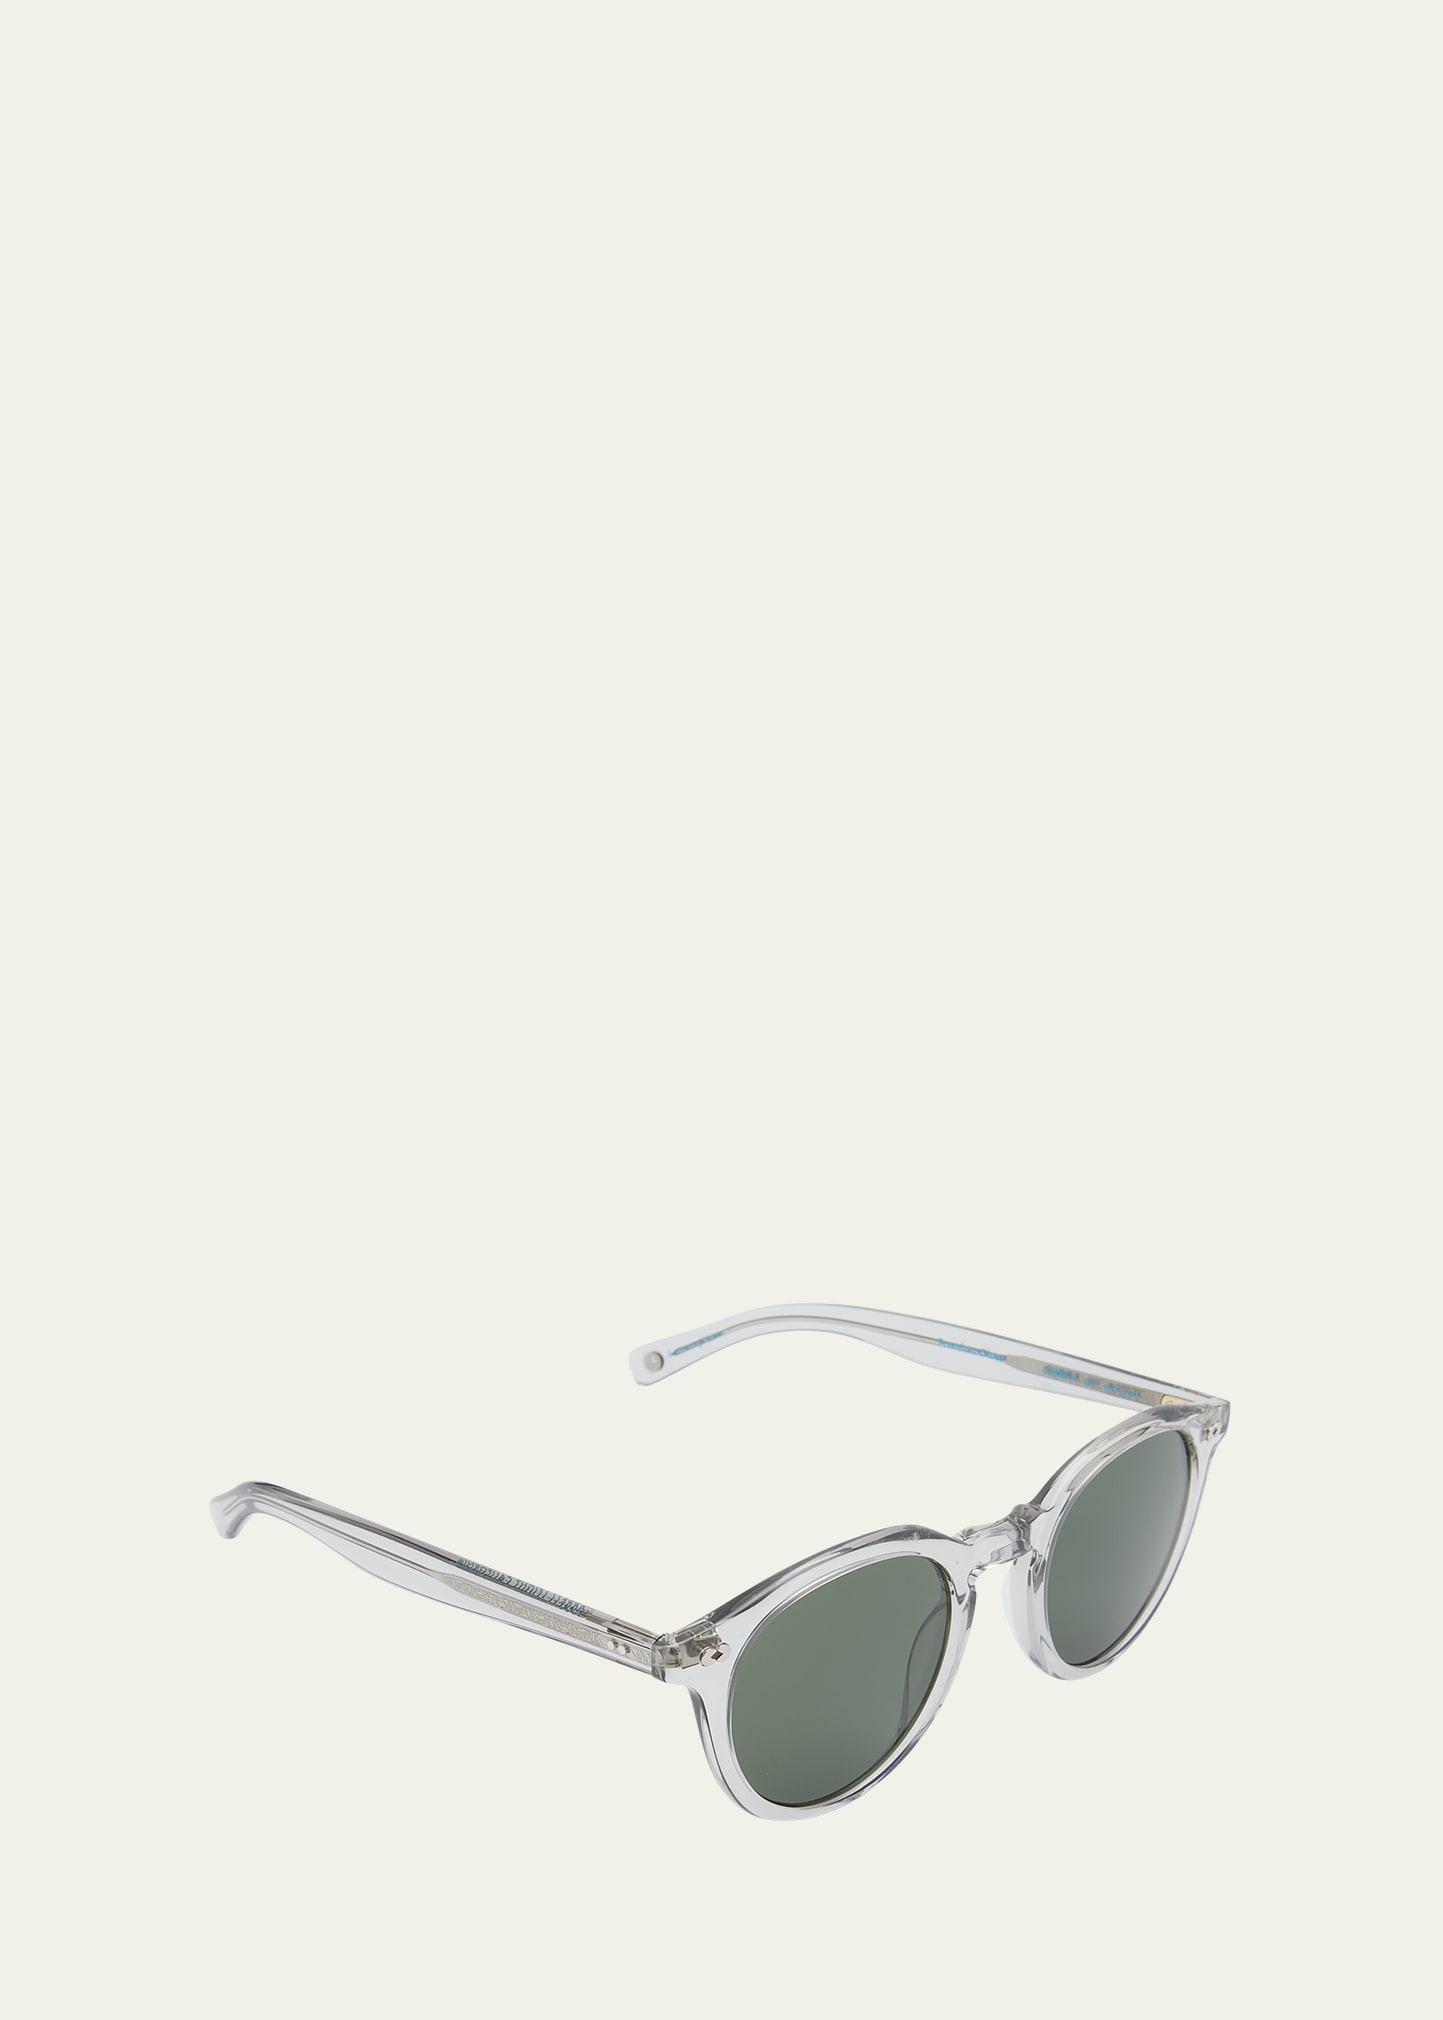 Garrett Leight Clune X Round Acetate Sunglasses In Gray/green Solid